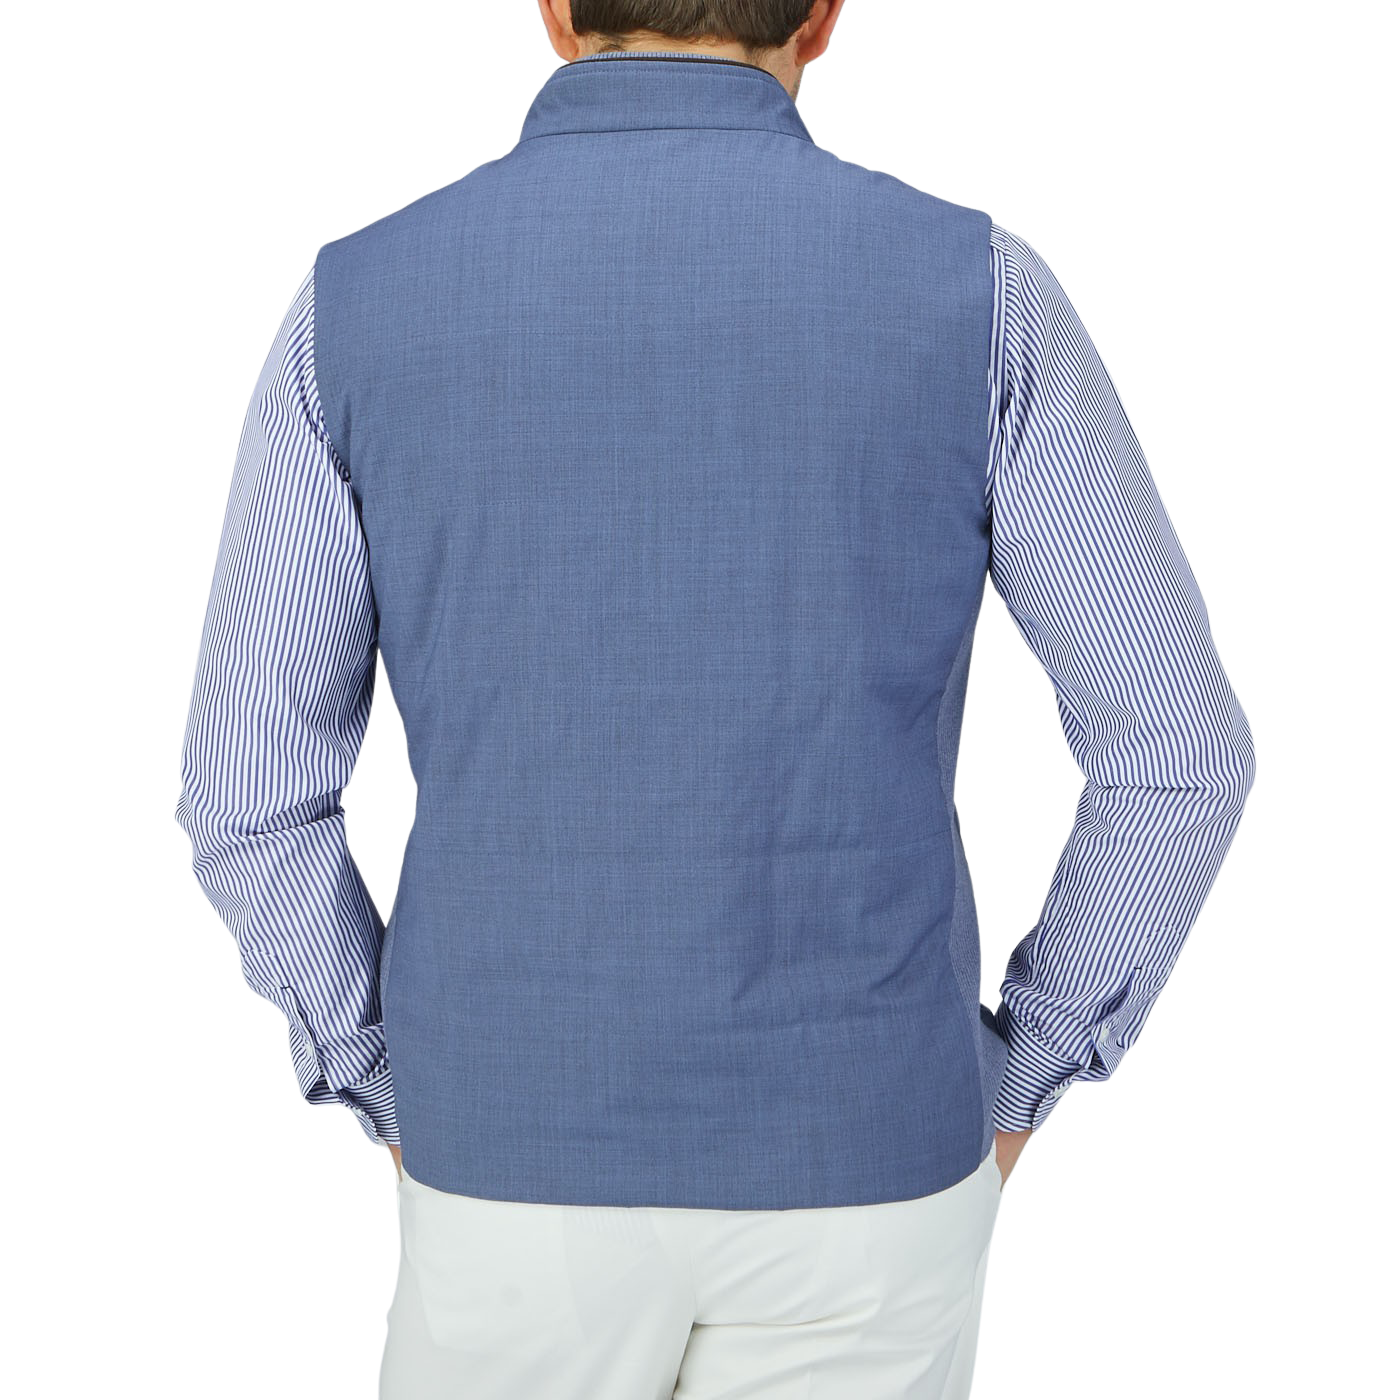 The back view of a man wearing a Maurizio Baldassari Light Blue Merino Wool Travel Gilet.